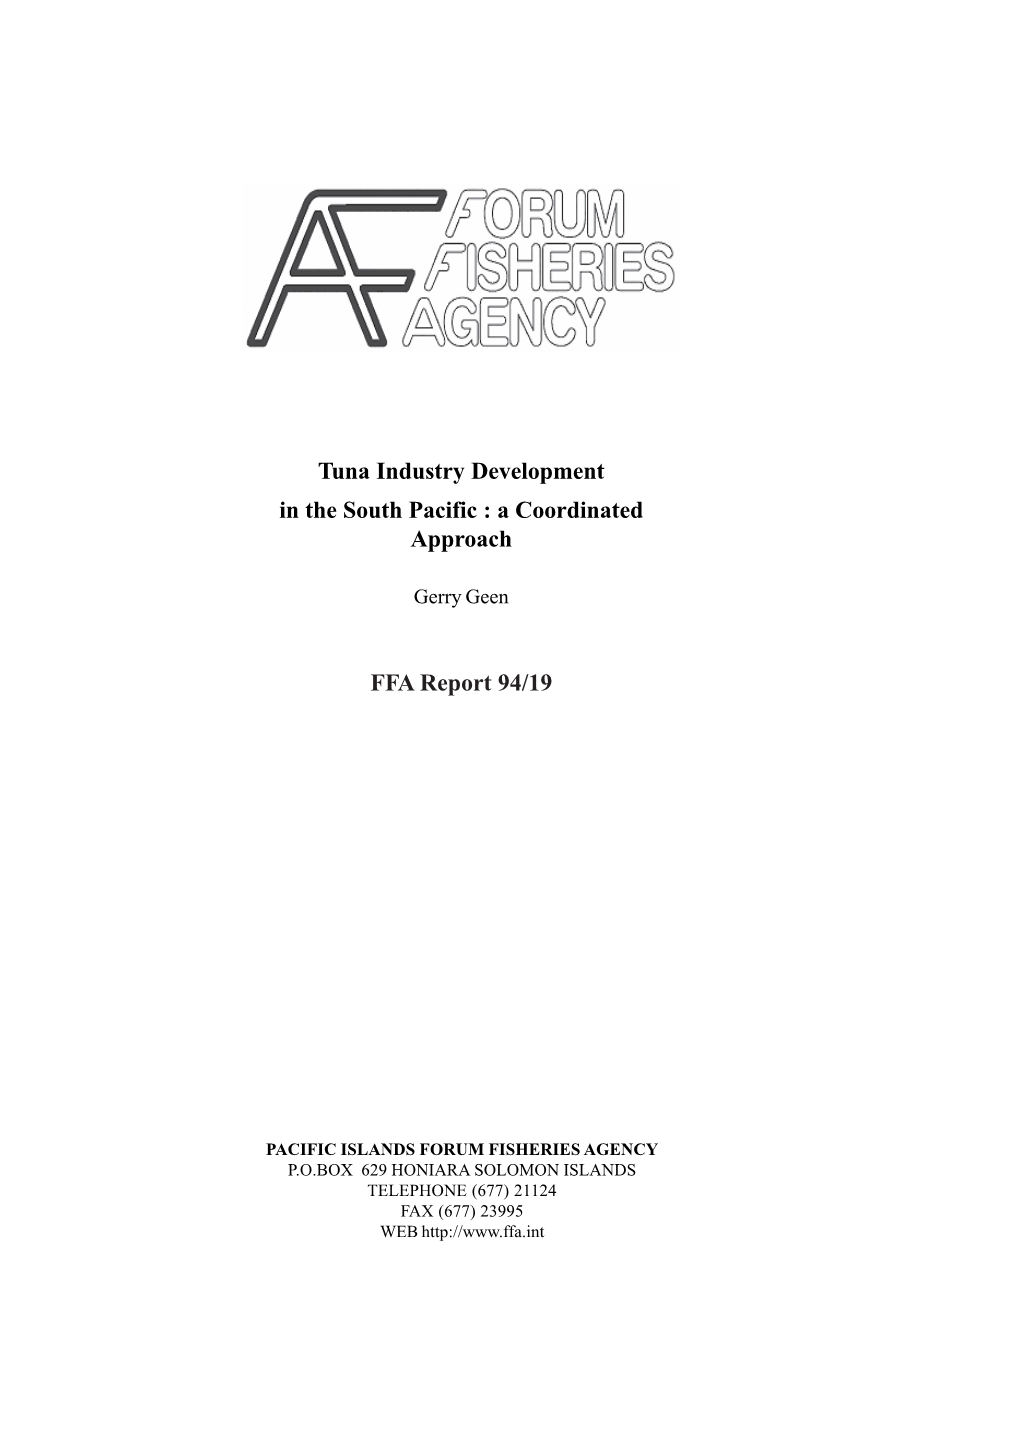 FFA Report 94/19 Tuna Industry Development in the South Pacific